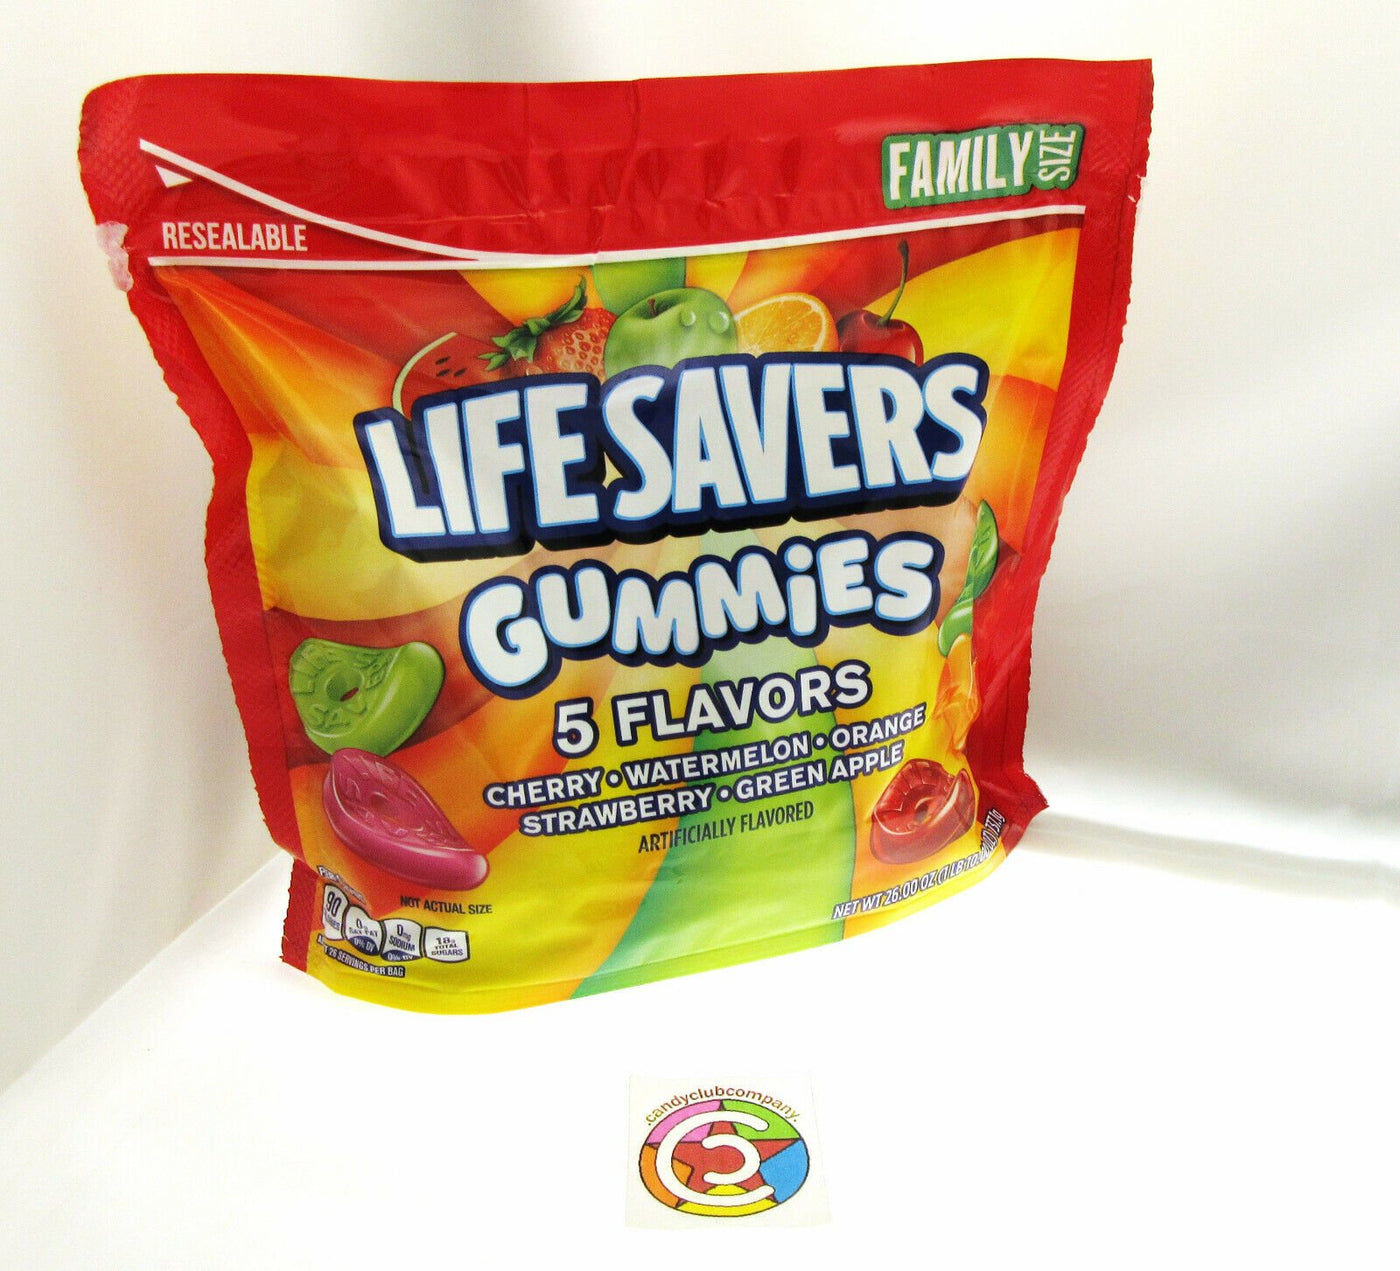 Lifesavers Gummies Gummy Candy ~ 26oz Bag